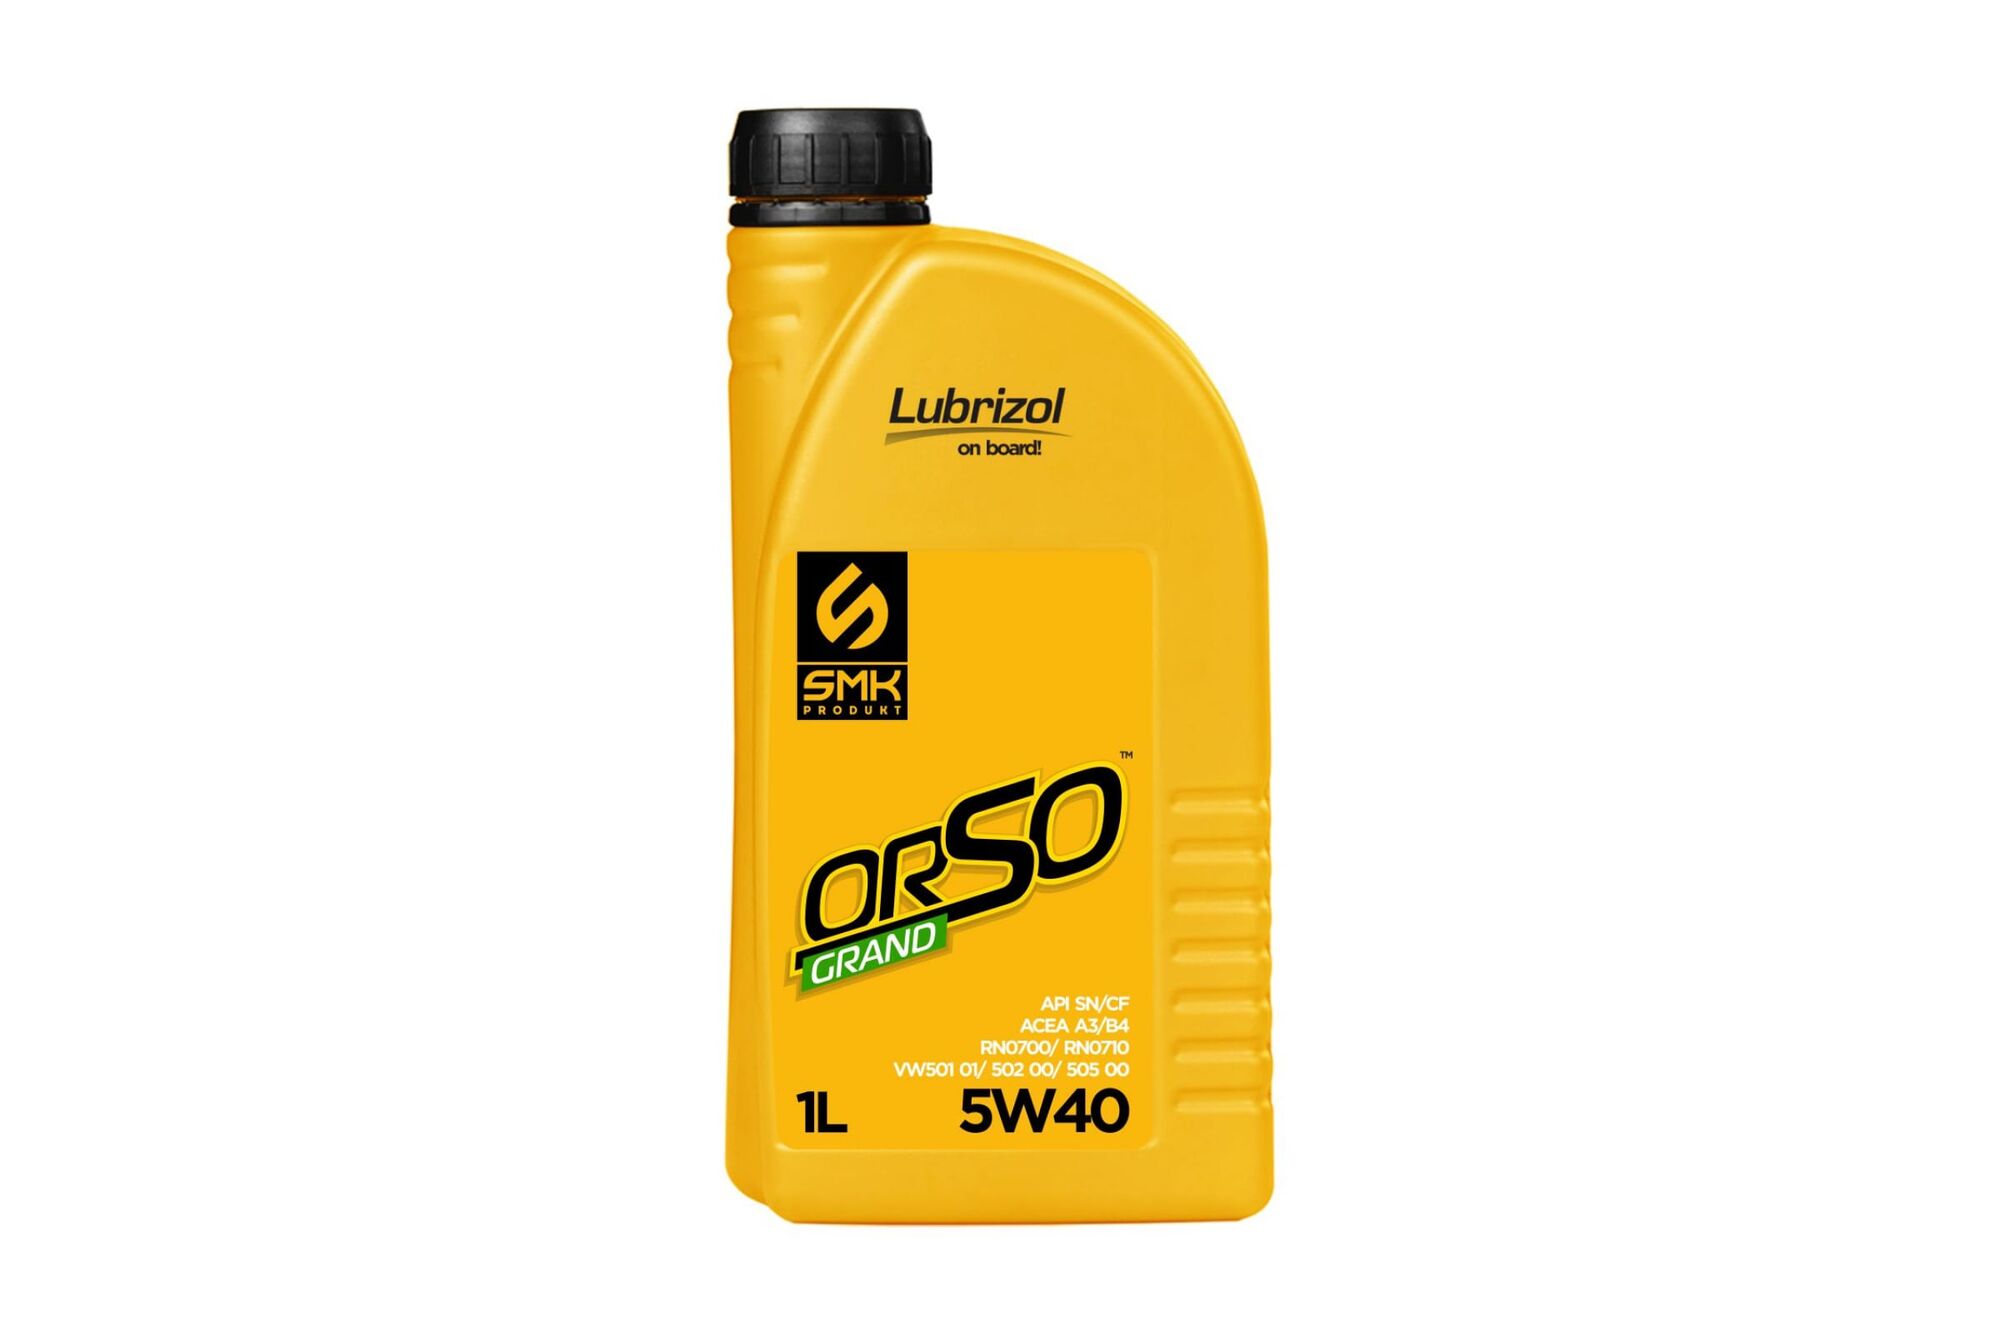 Универсальное моторное масло SMK Orso Grand 540 5W-40 API SN/CF 540ORGR001 SMK Produkt